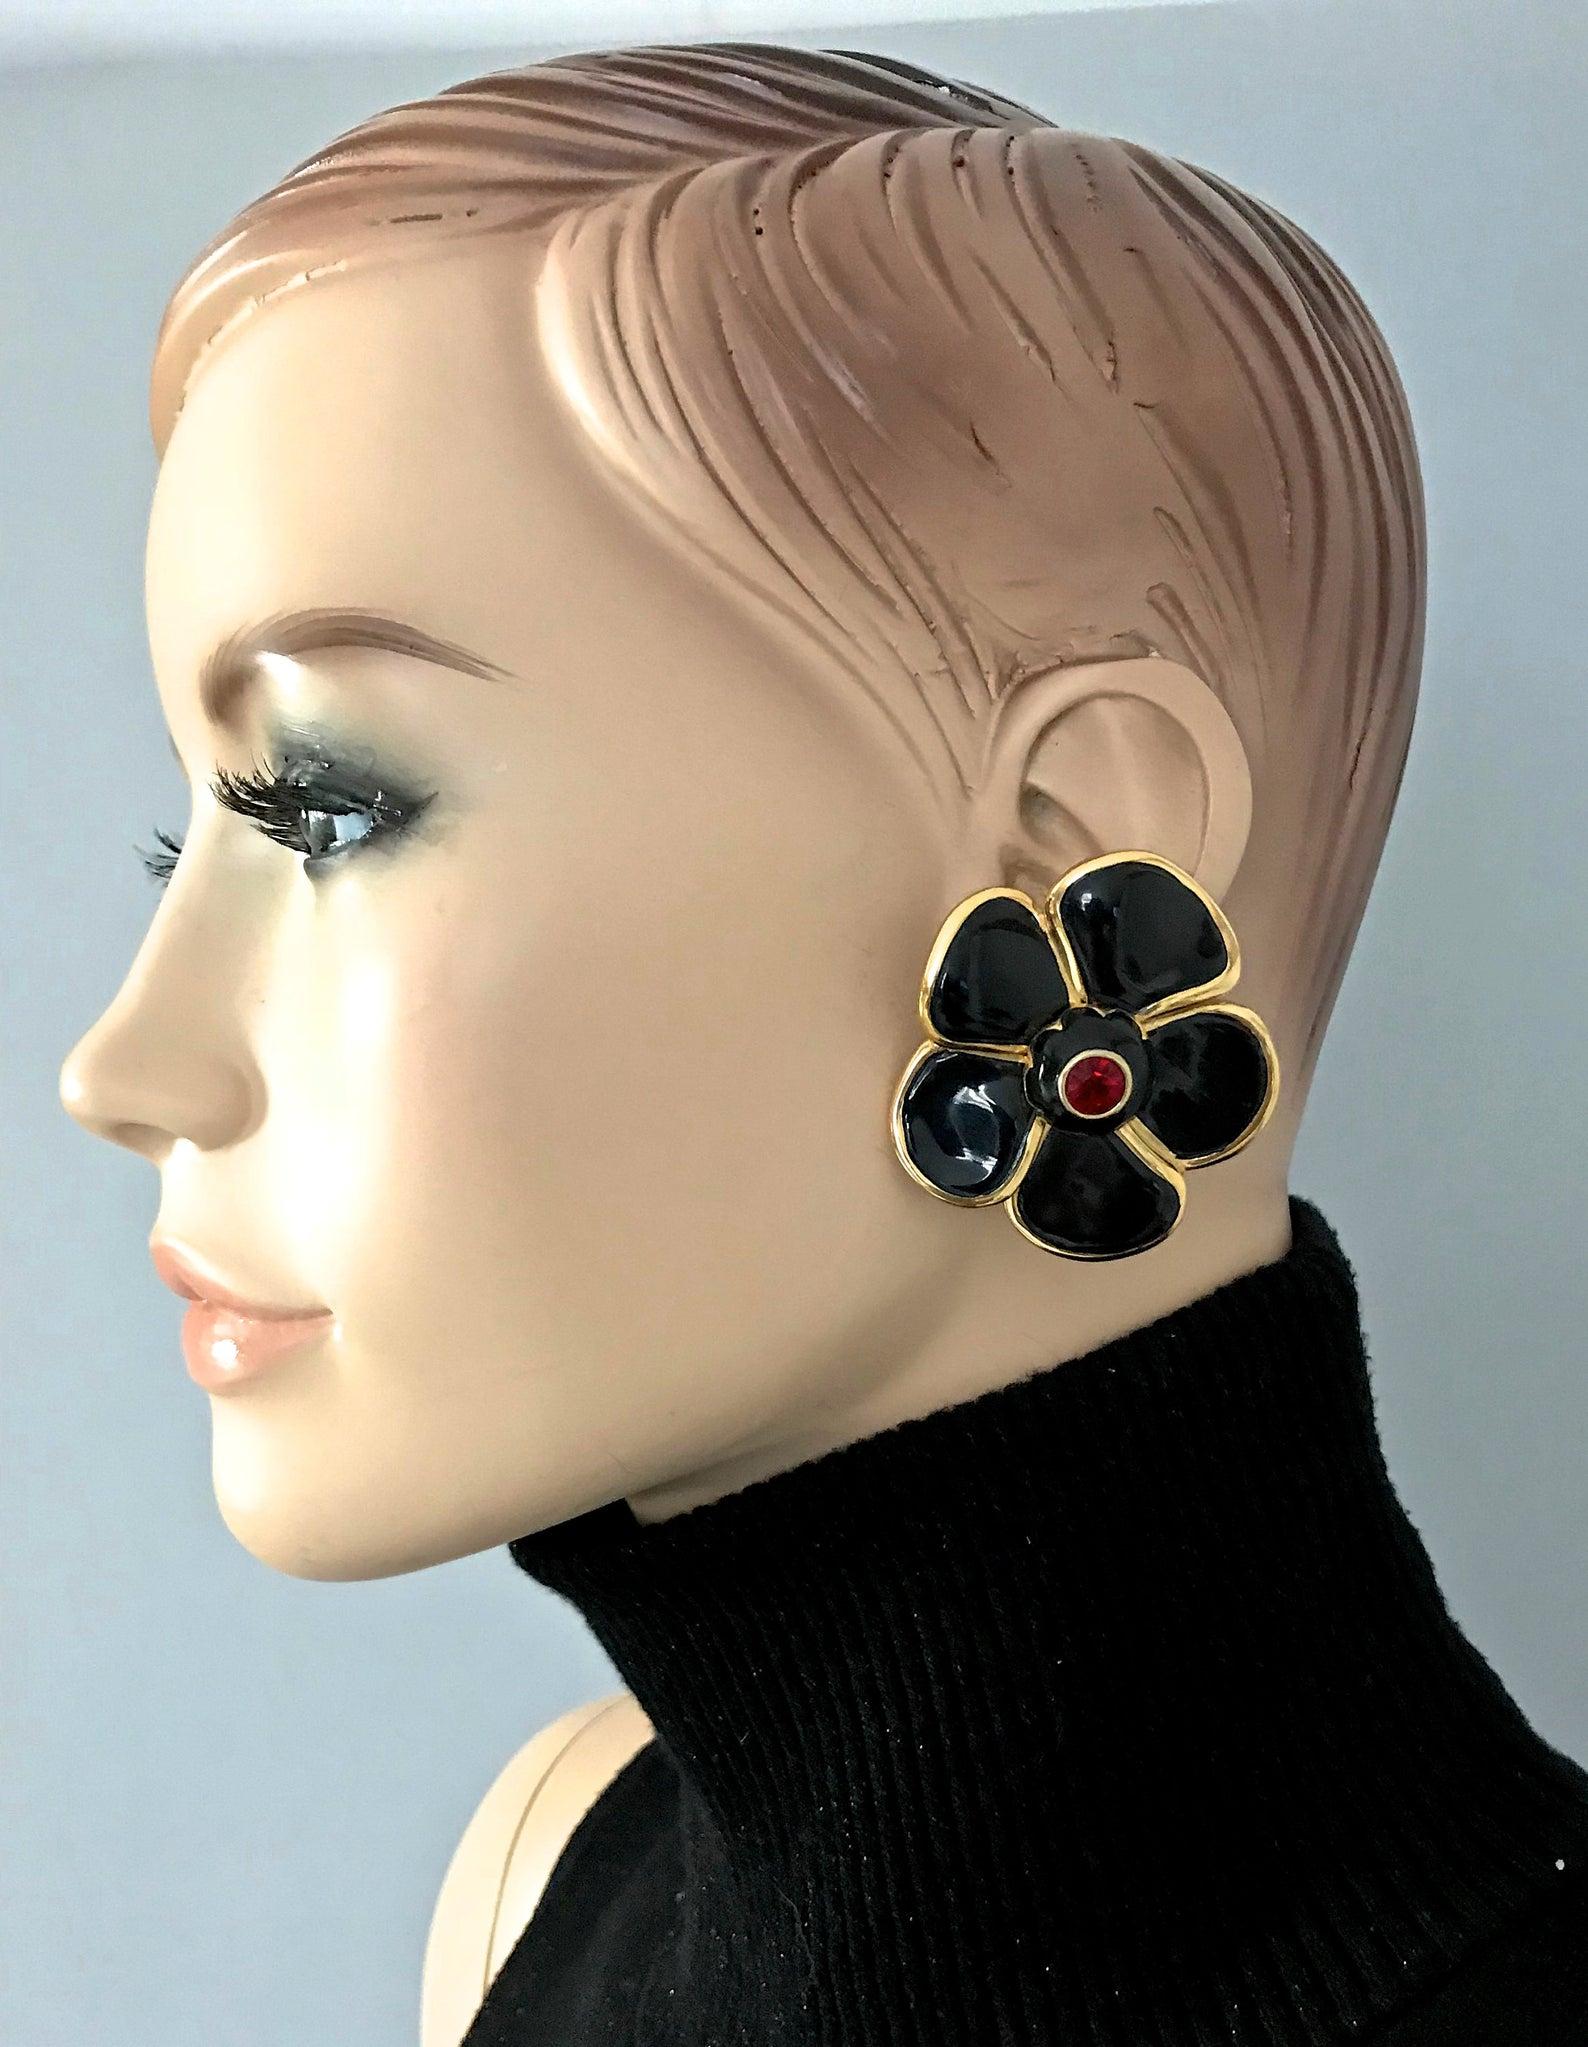 Vintage Massive YVES SAINT LAURENT Ysl Flower Enamel Rhinestone Earrings

Measurements:
Height: 2 inches (5.1 cm)
Width: 1.85 inches (4.7 cm)
Weight per Earring: 32 grams

Features:
- 100% Authentic YVES SAINT LAURENT.
- Massive flower enamel